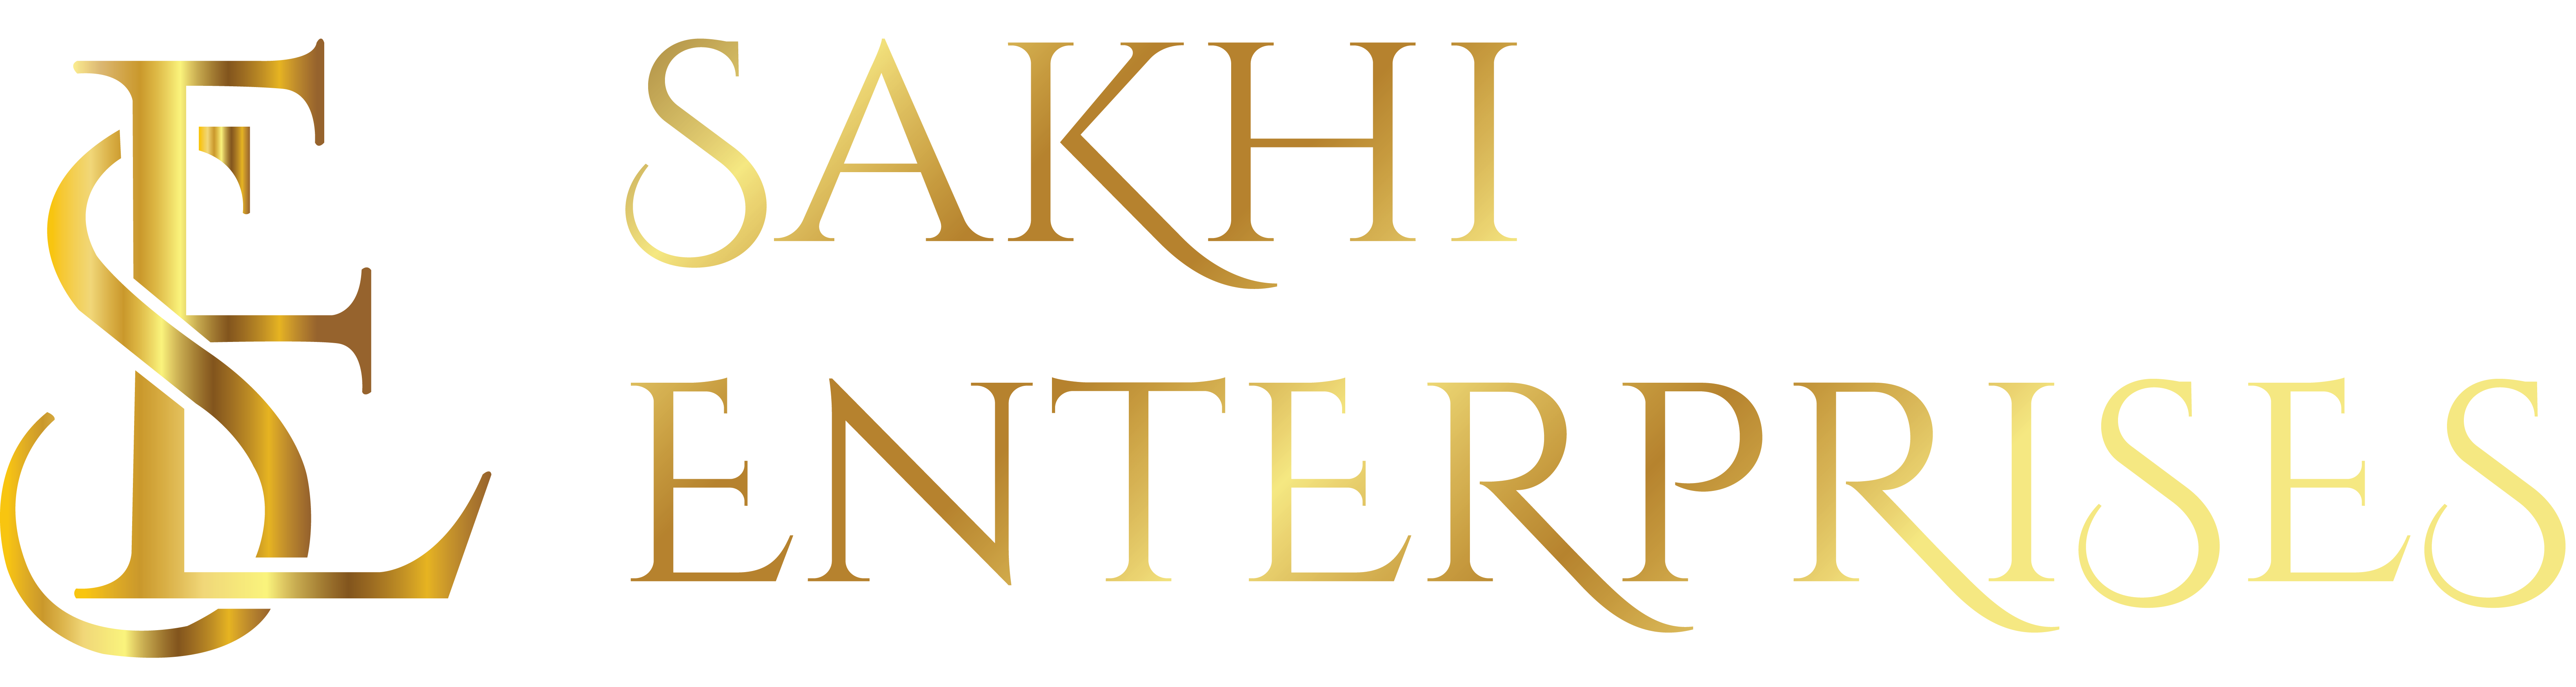 Sakkhi Special - Logo Design :: Behance